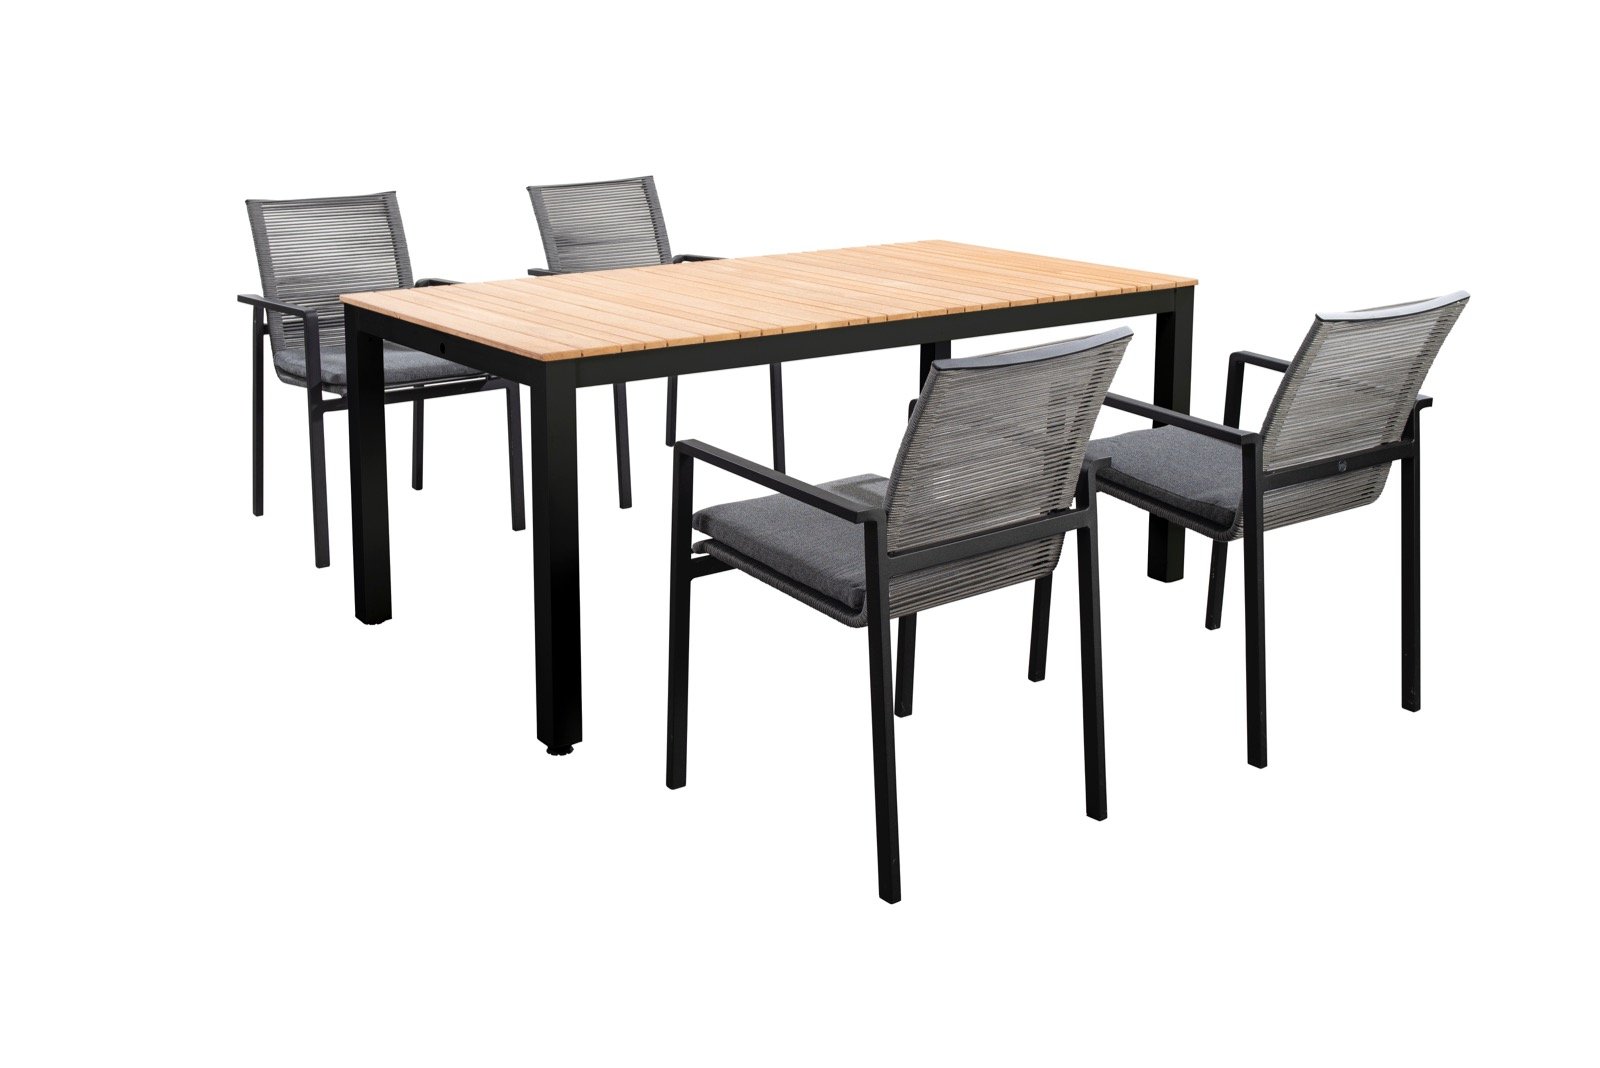 Yoi Tuinset Arashi tafel dark grey, teak 169x90 cm met 4 stoelen Vedella stoel dark grey, rope dark grey inclusief kussens - 